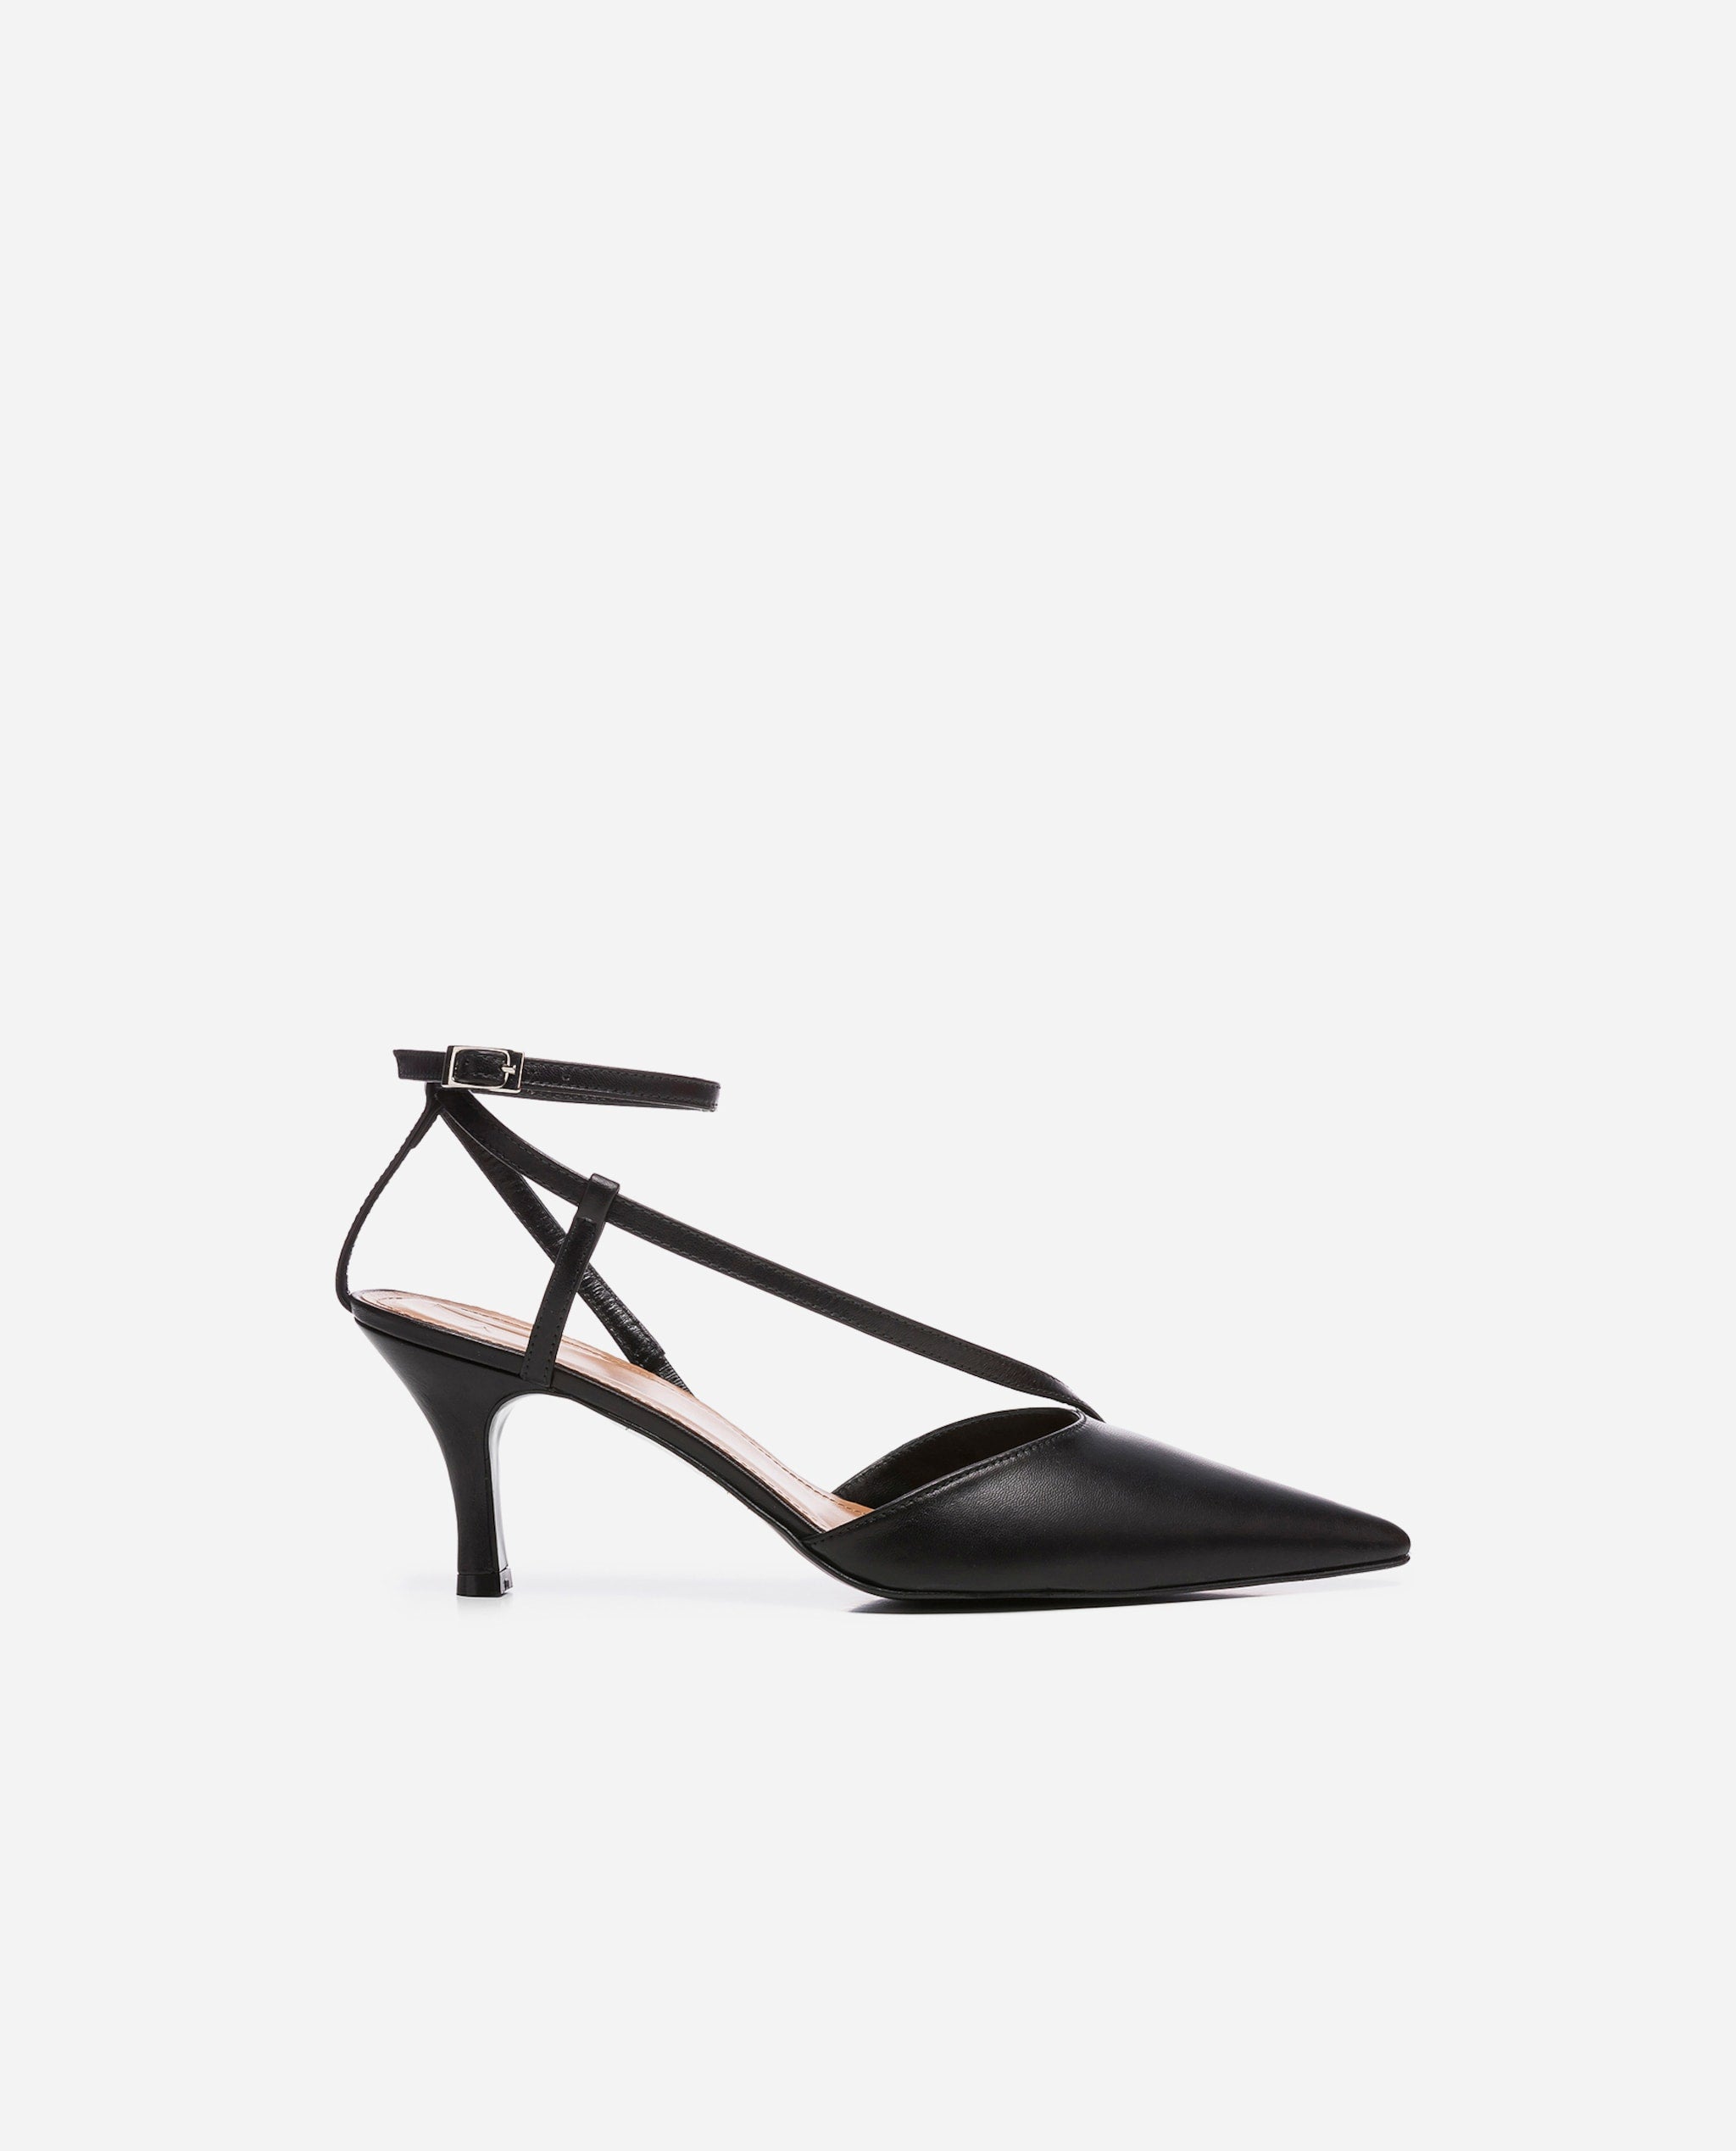 Fay Leather Black Heeled Shoes Heels 20010411601-001 - 7